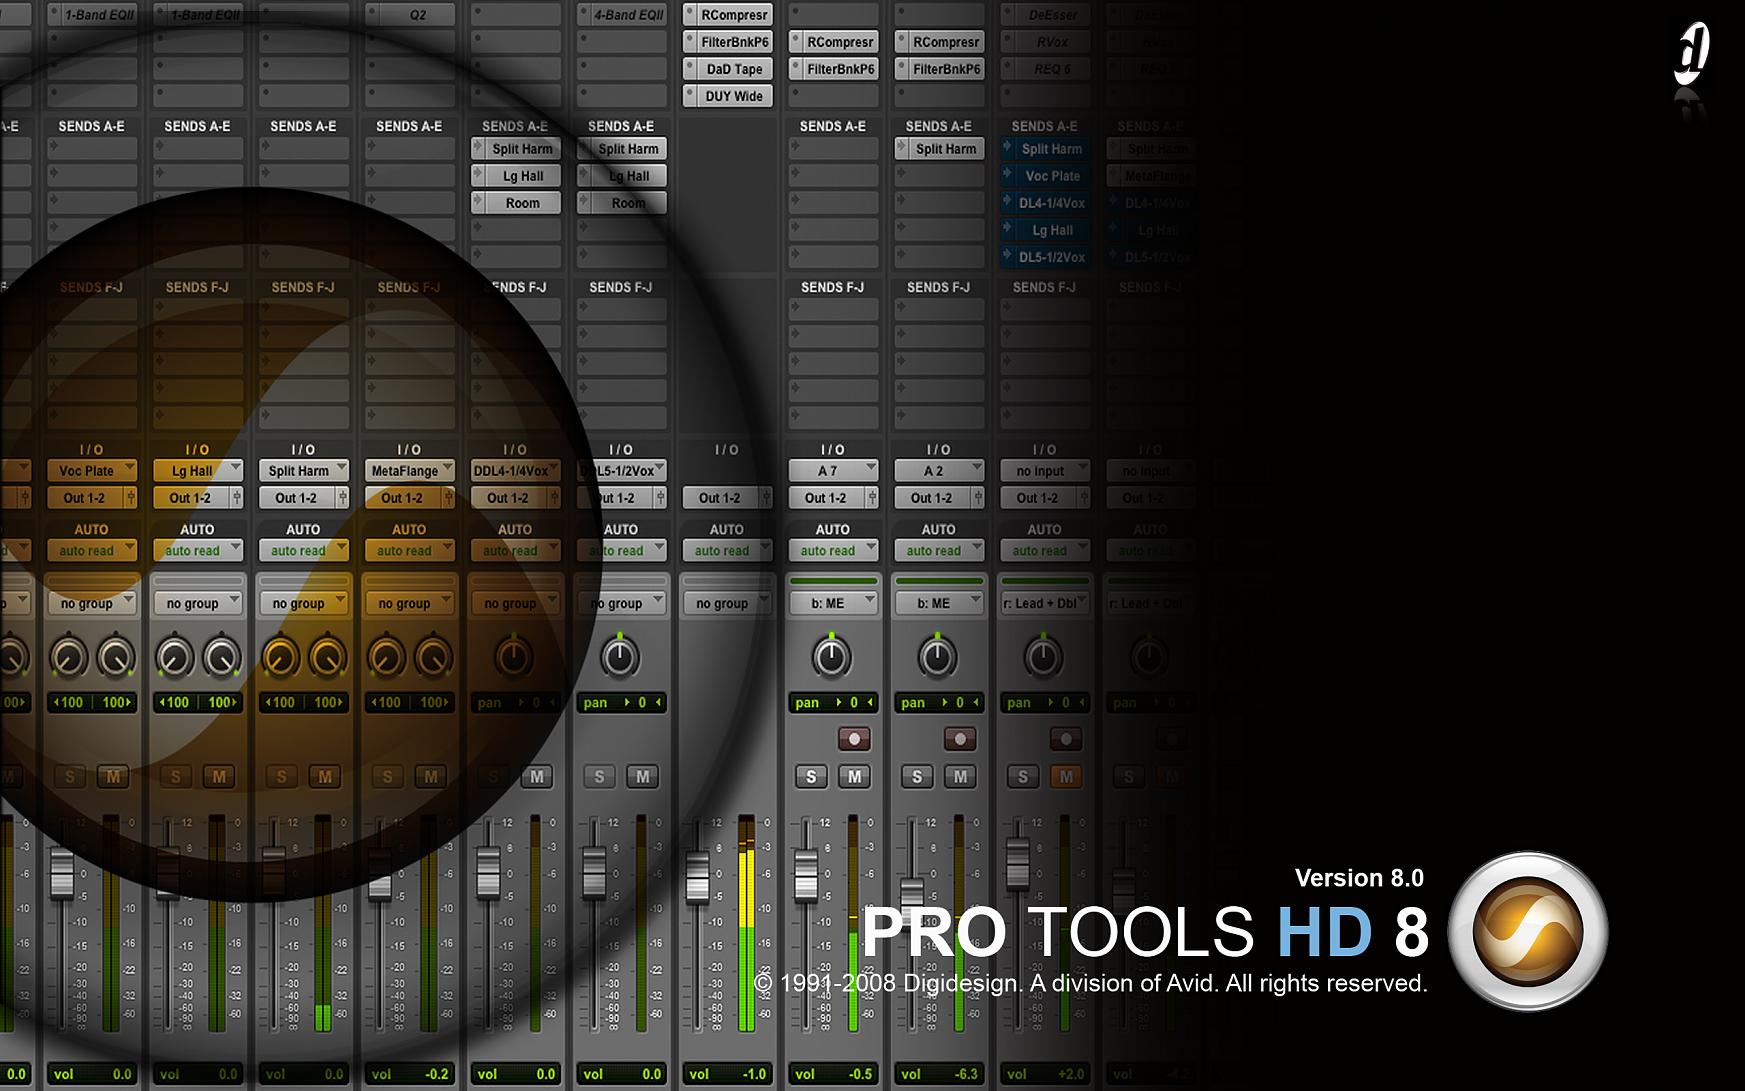 Pro tools 8 free download